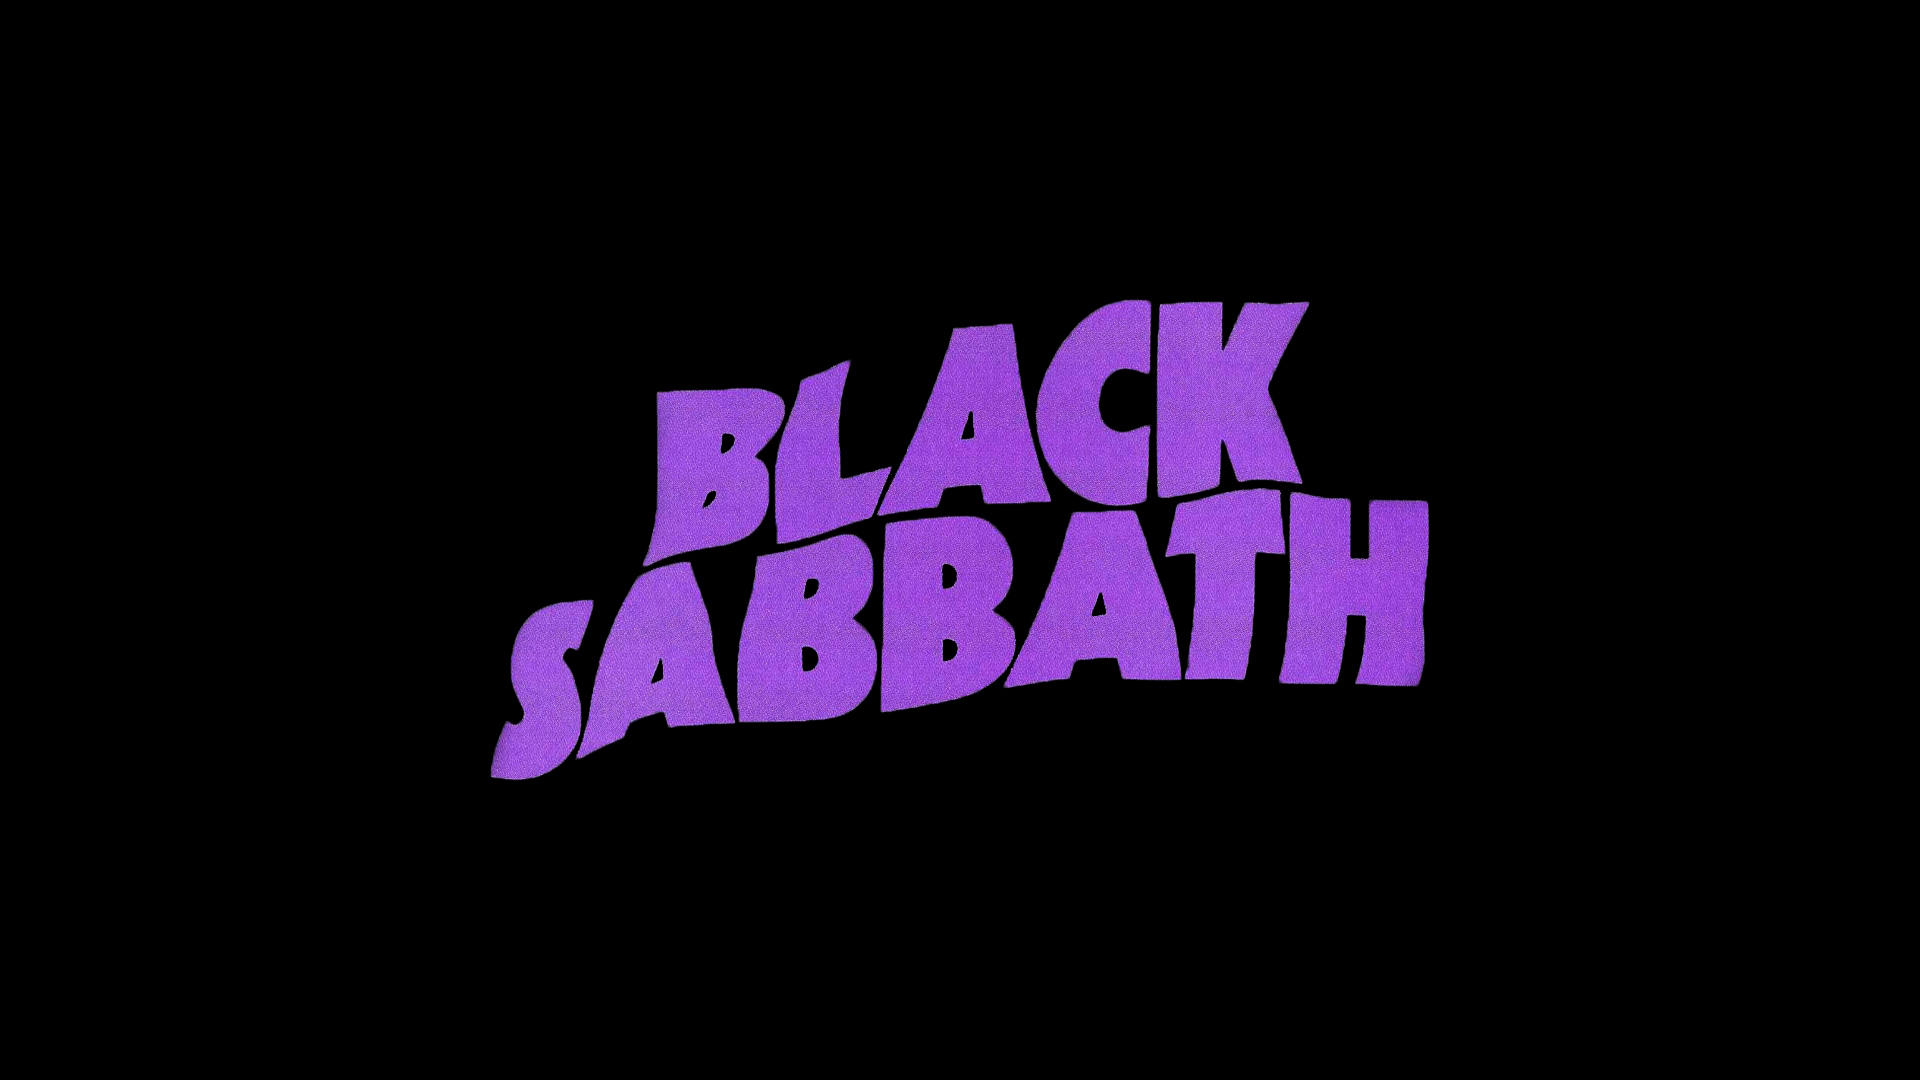 Black Sabbath Logo Wallpaper By Darrendisaster